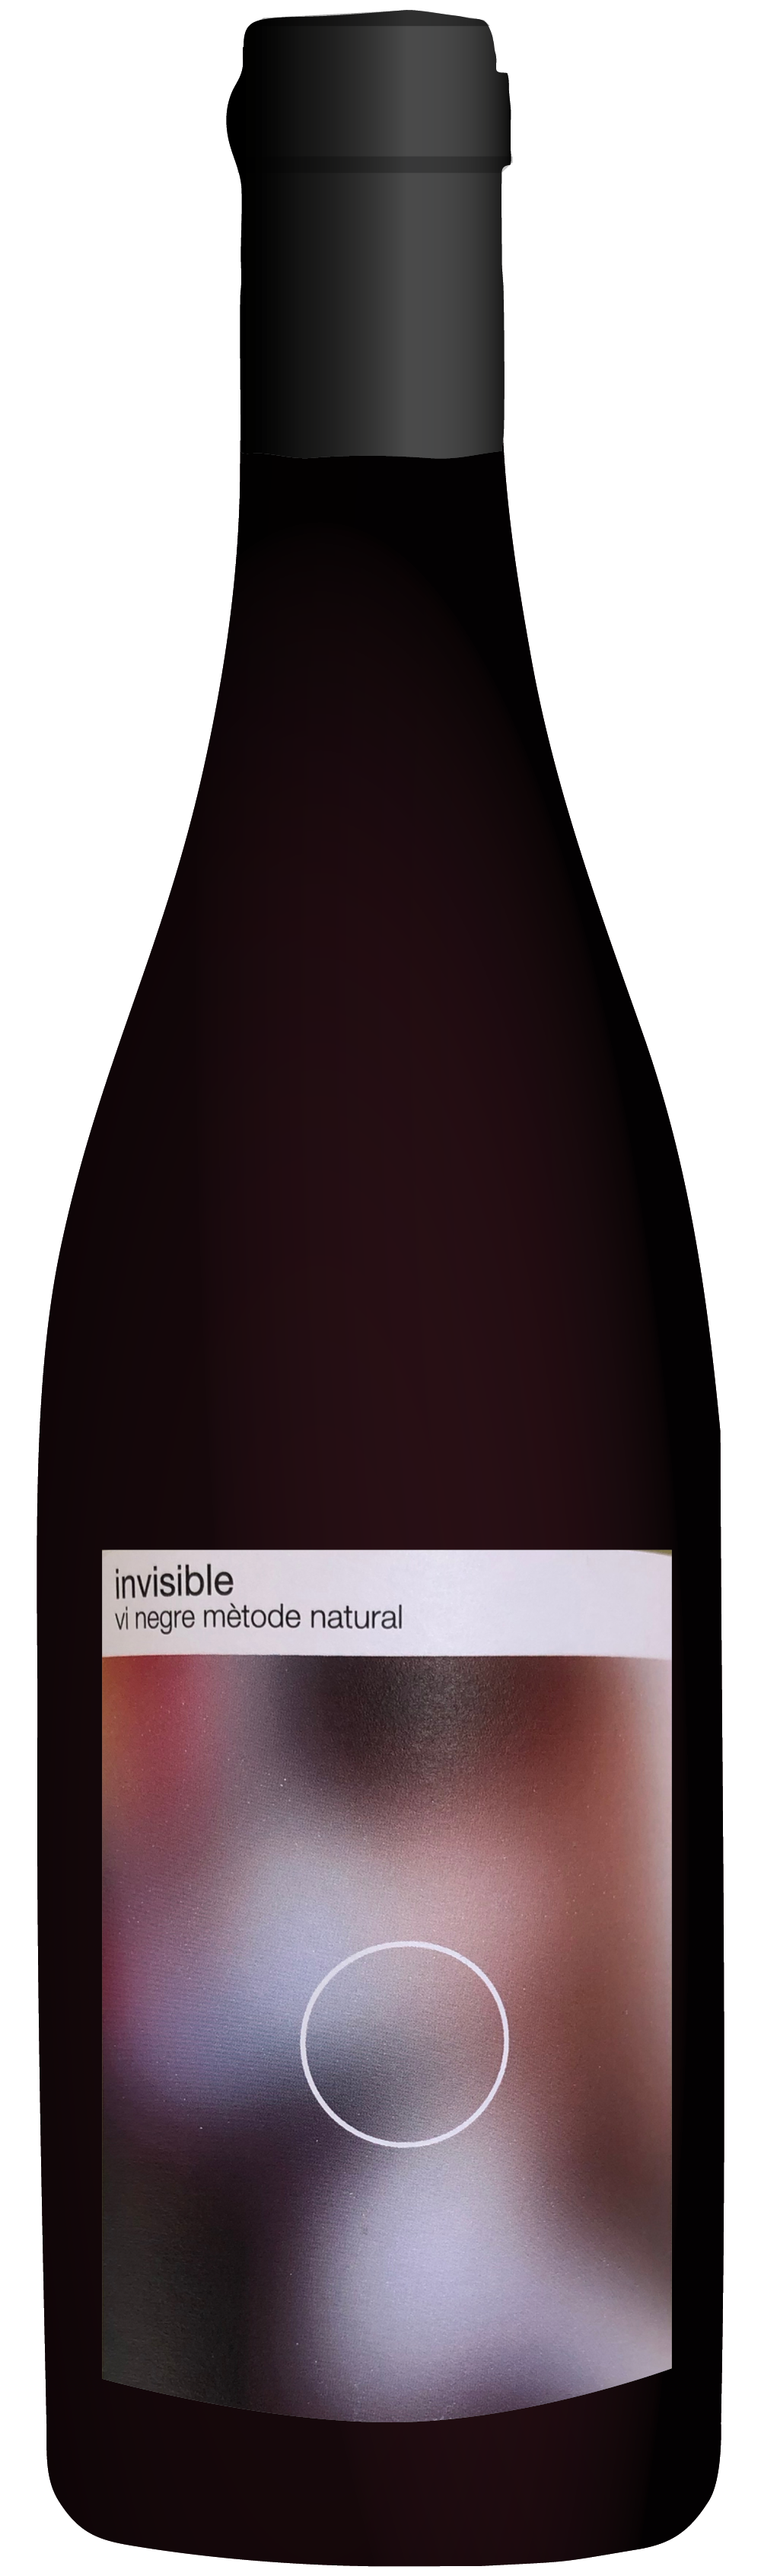 the natural wine company club march 2021 spain viamic invisible